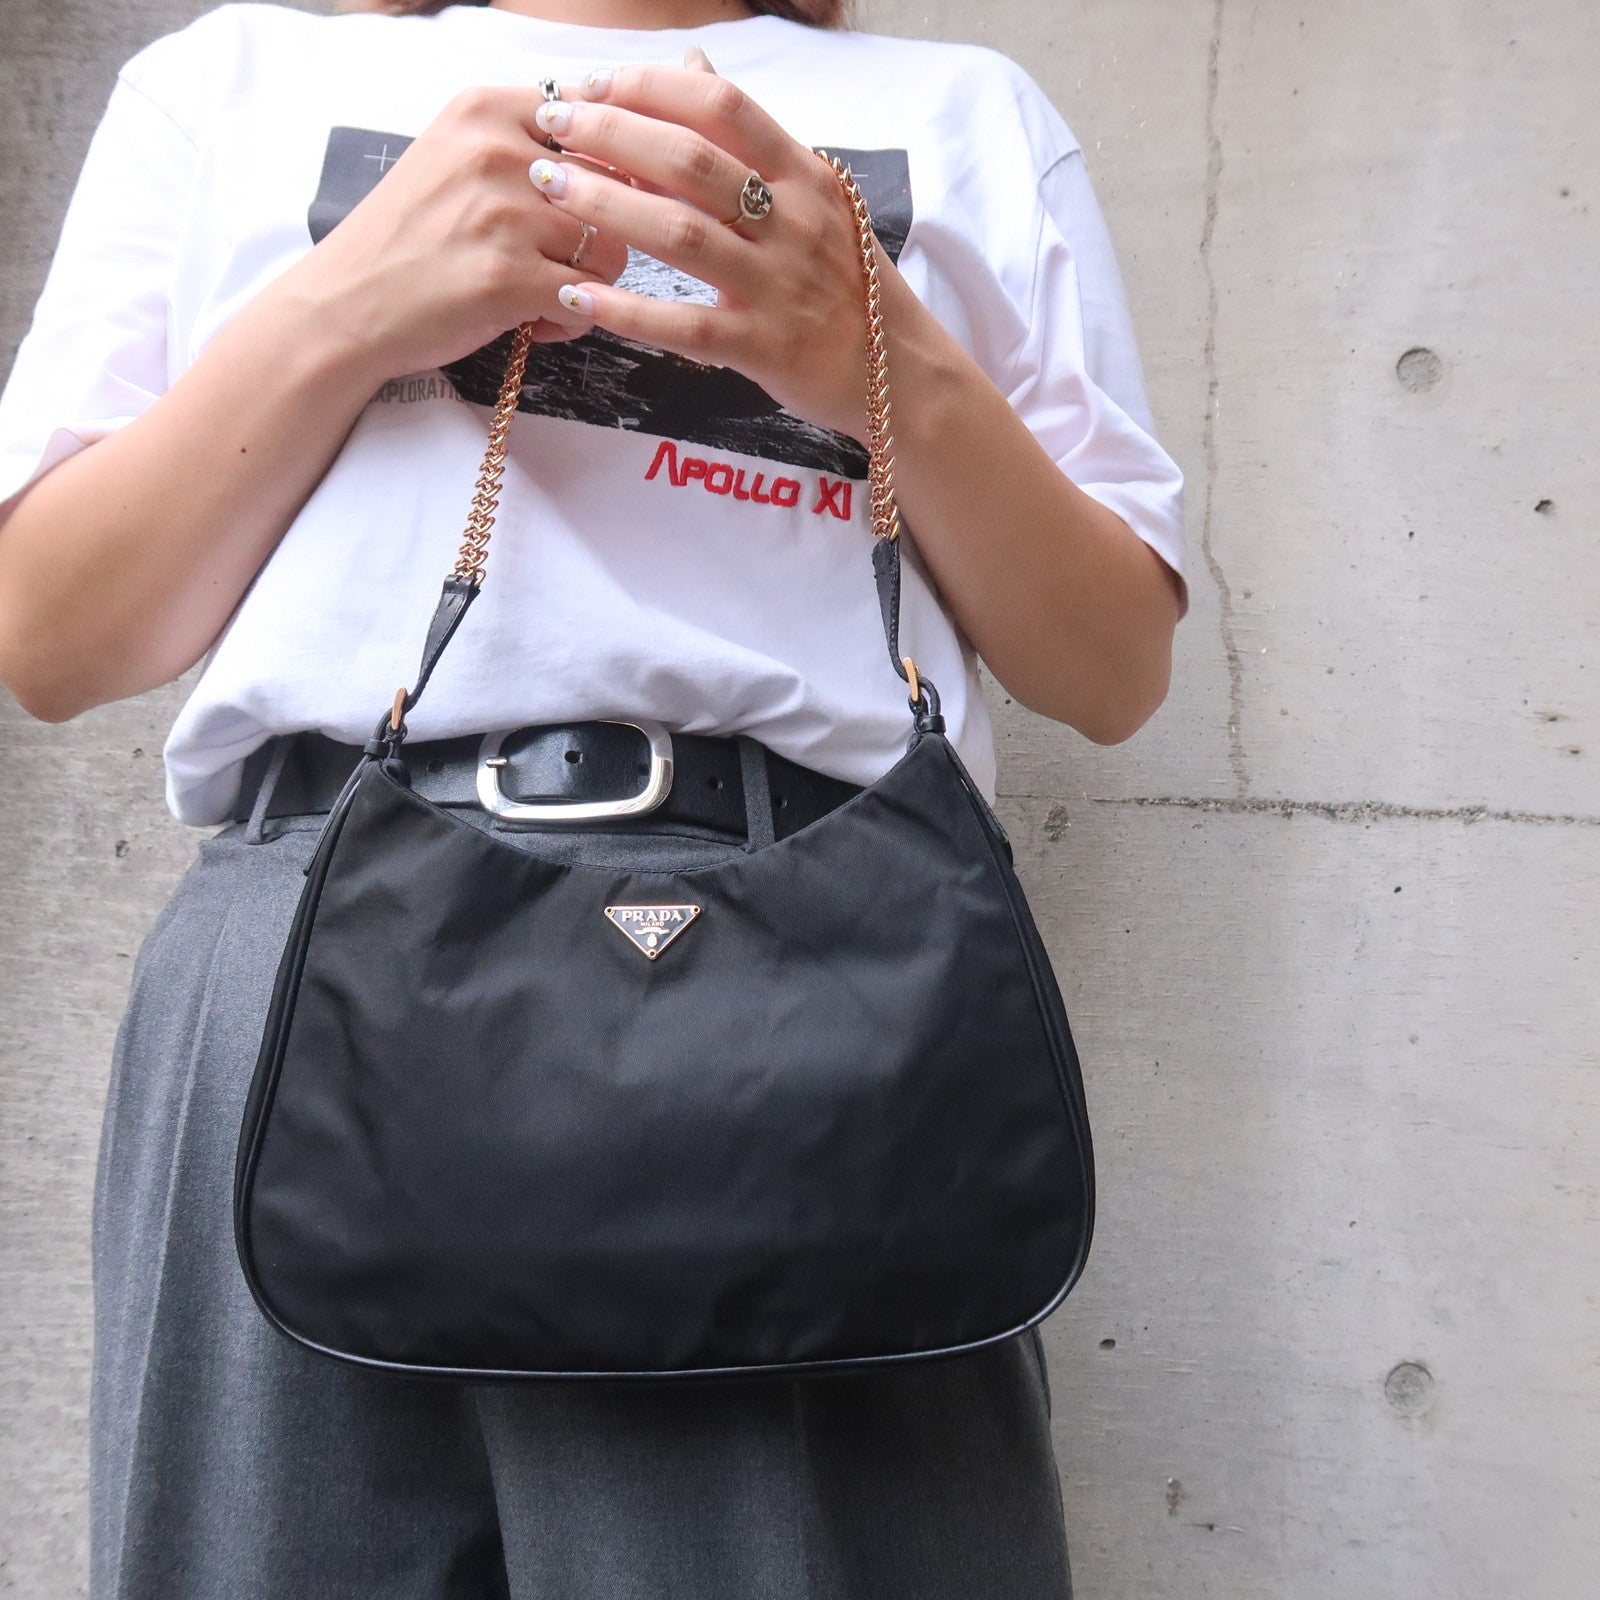 PRADA Nylon & Leather Chain Shoulder Bag Black